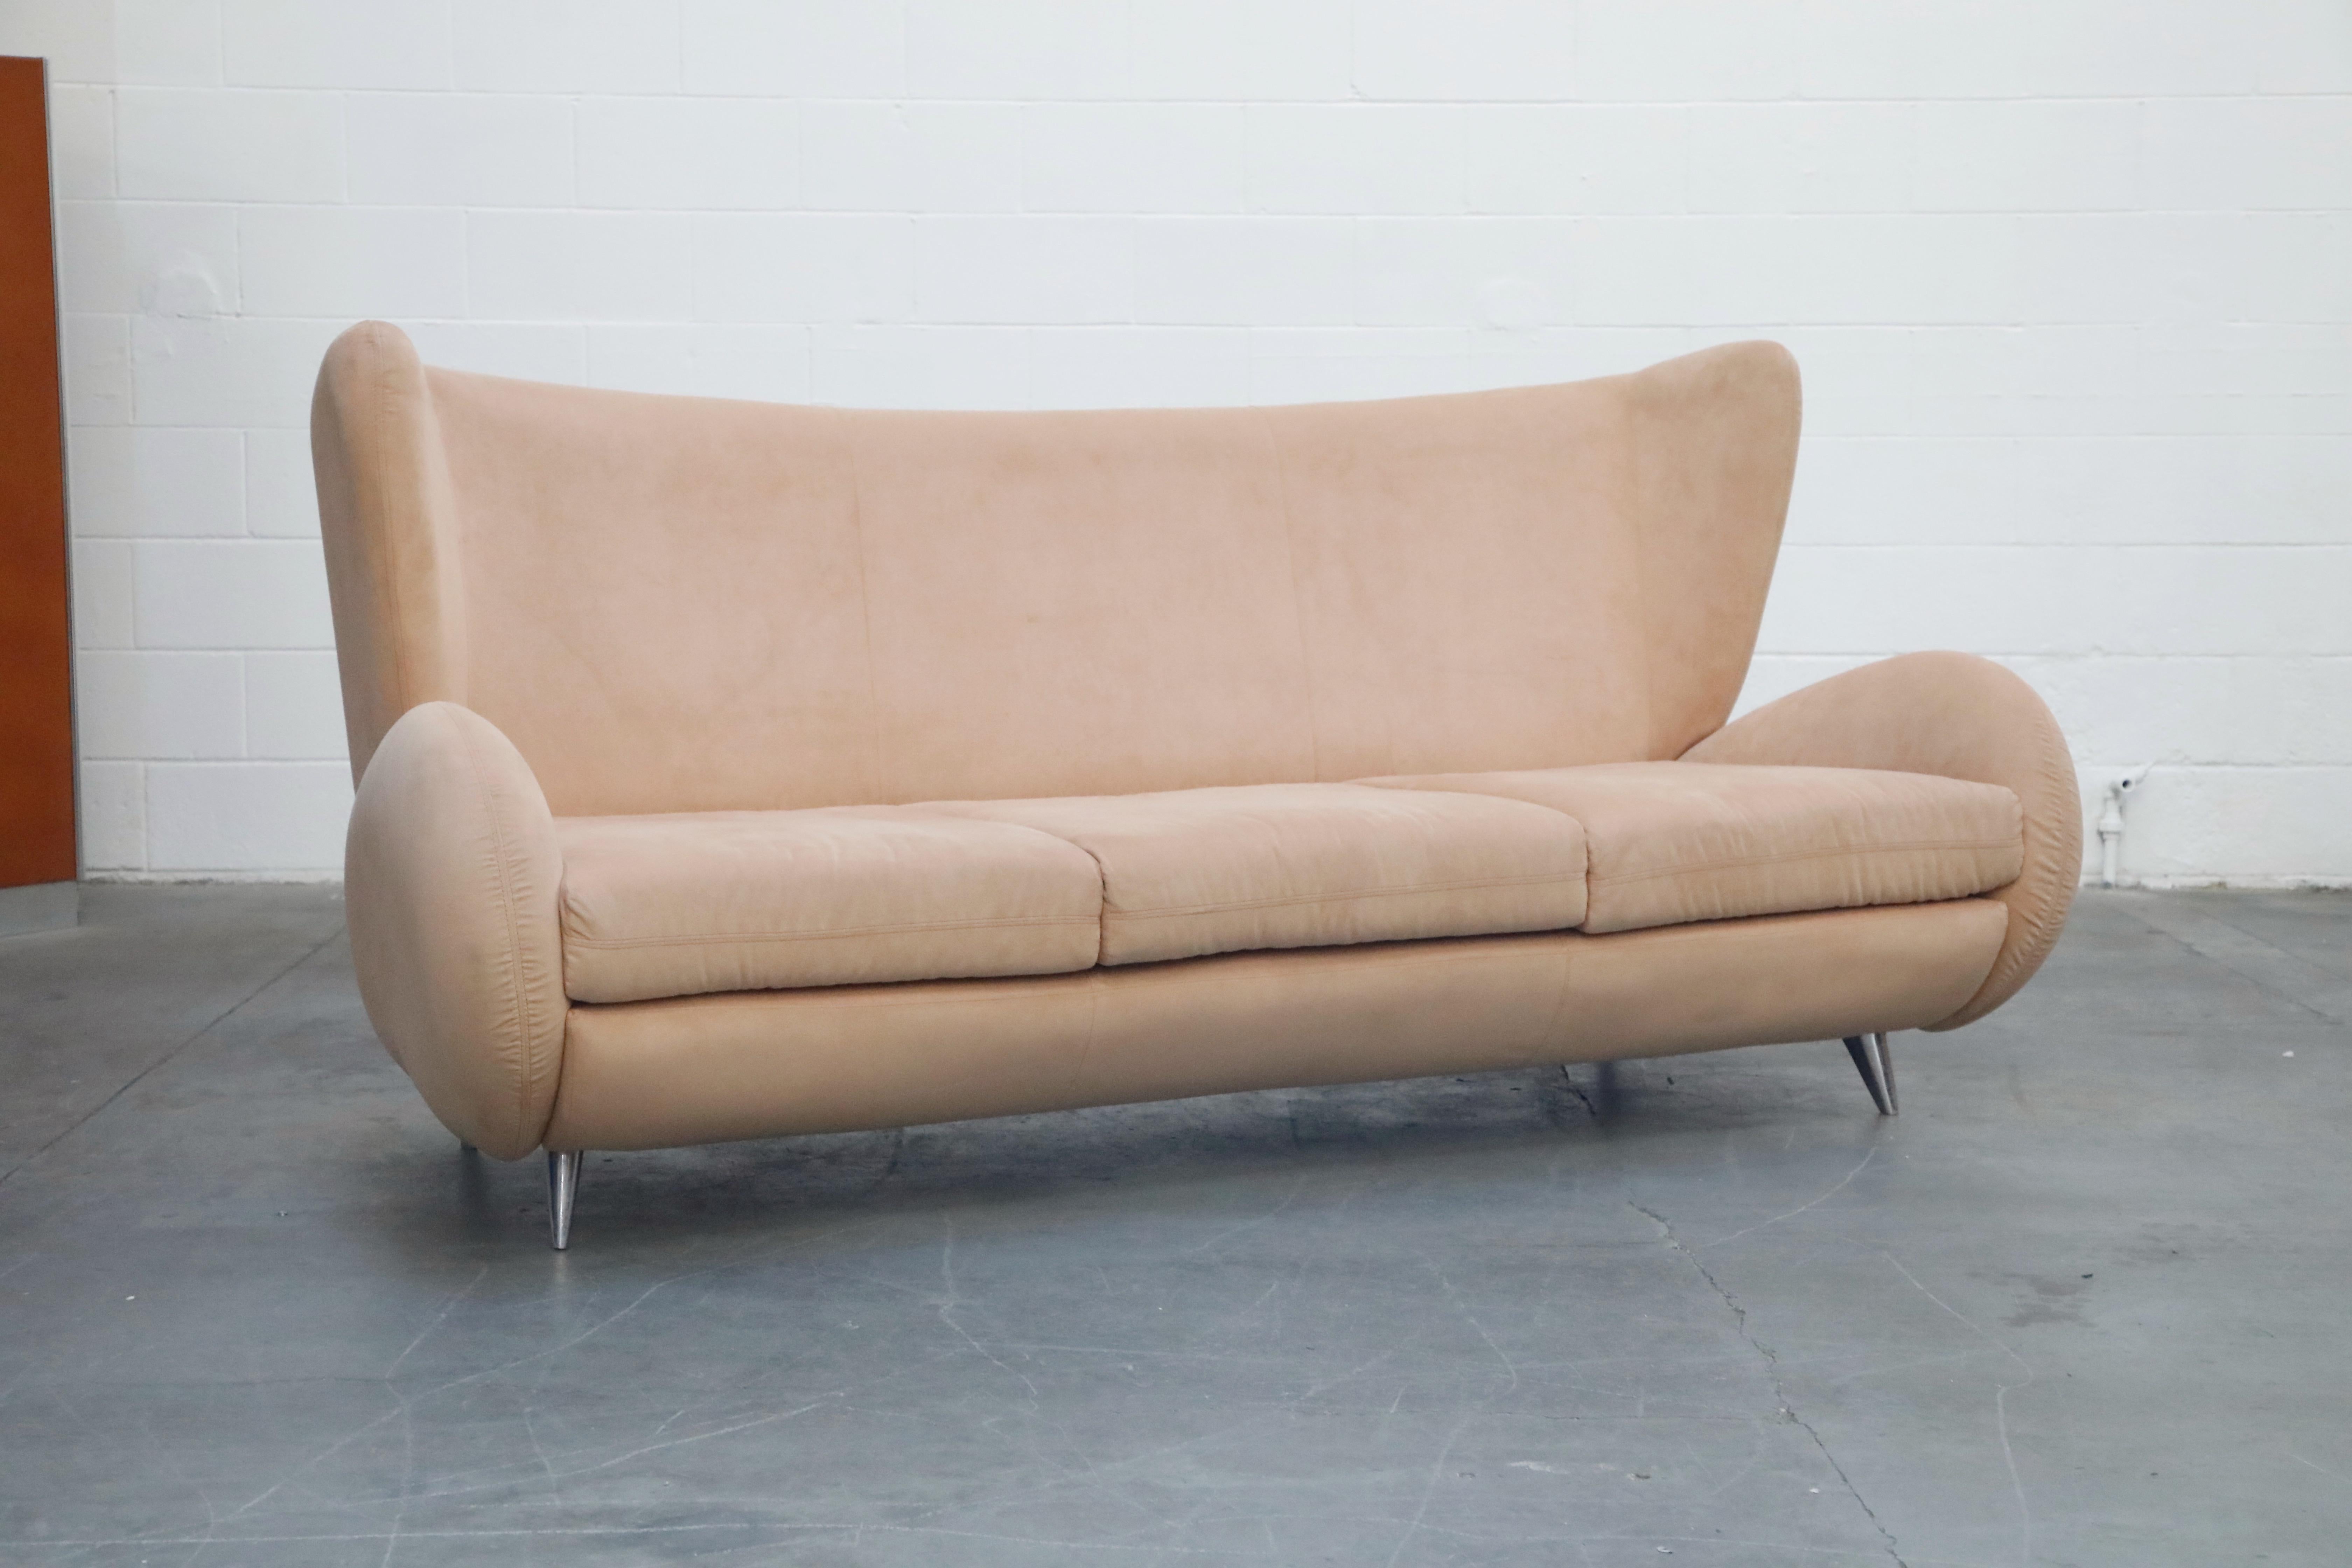 Post-Modern Vladimir Kagan for American Leather 'Fiftyish' Wingback Sofa, Signed